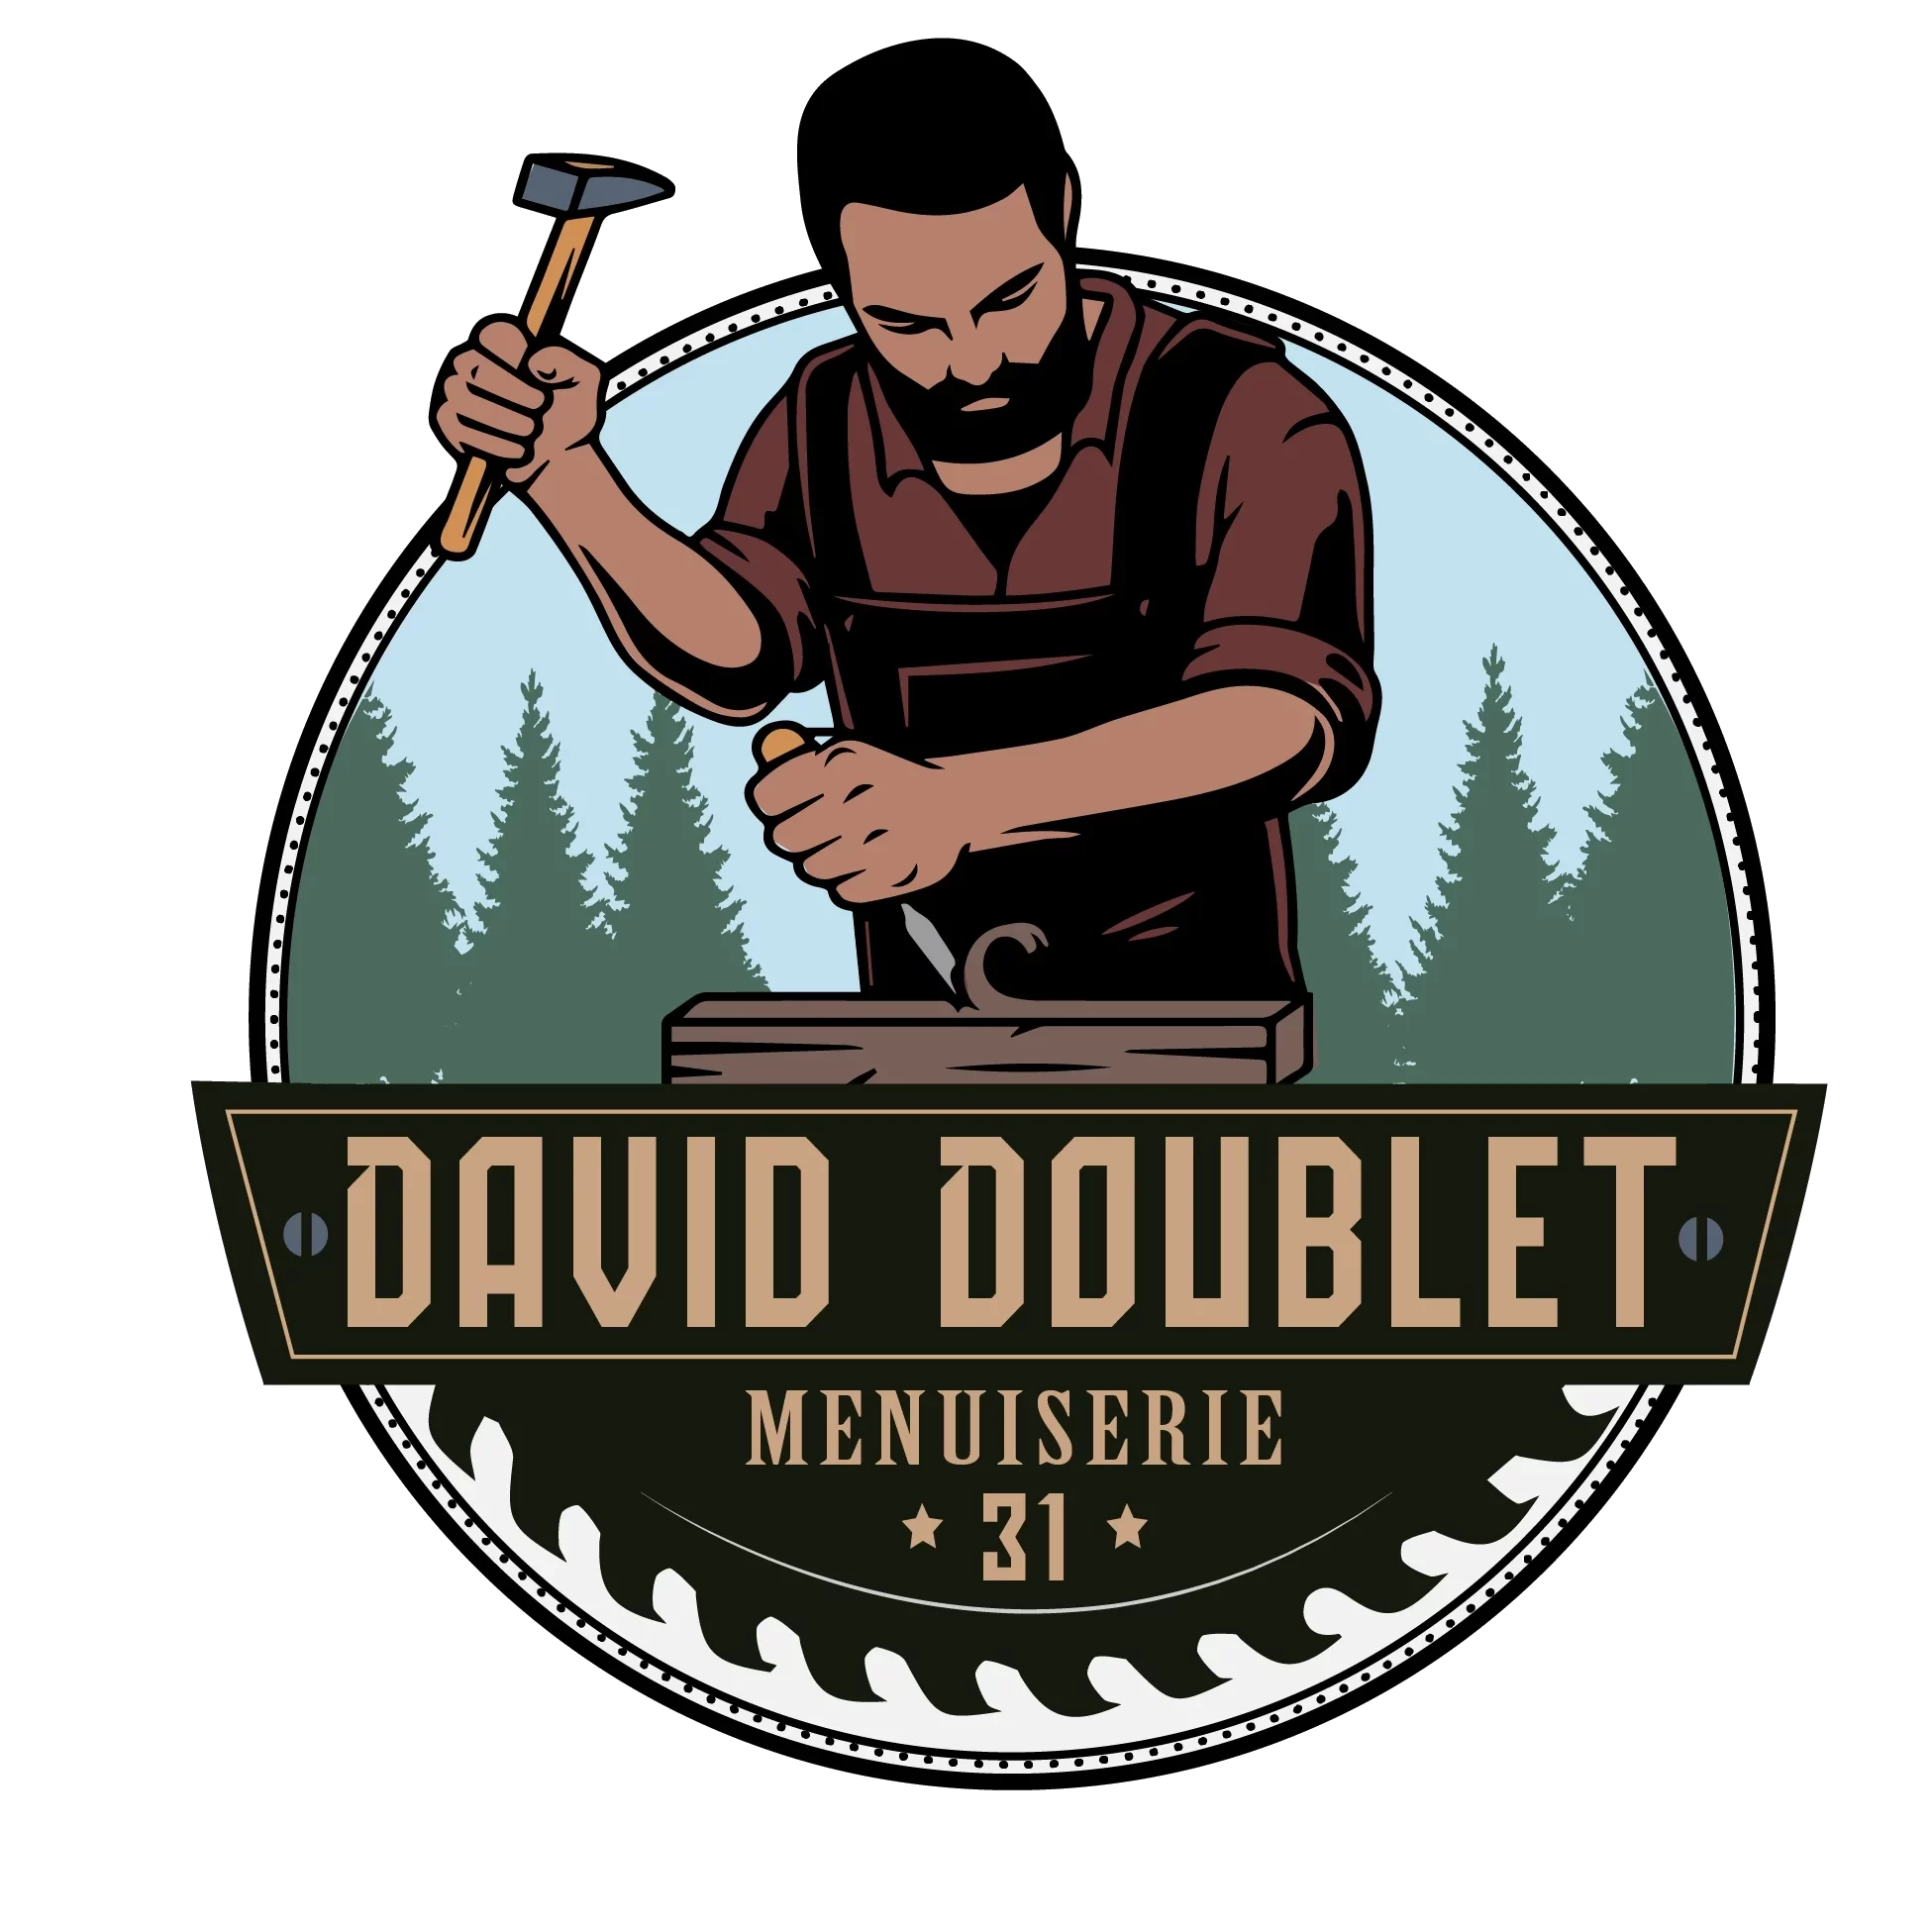 David doublet logo